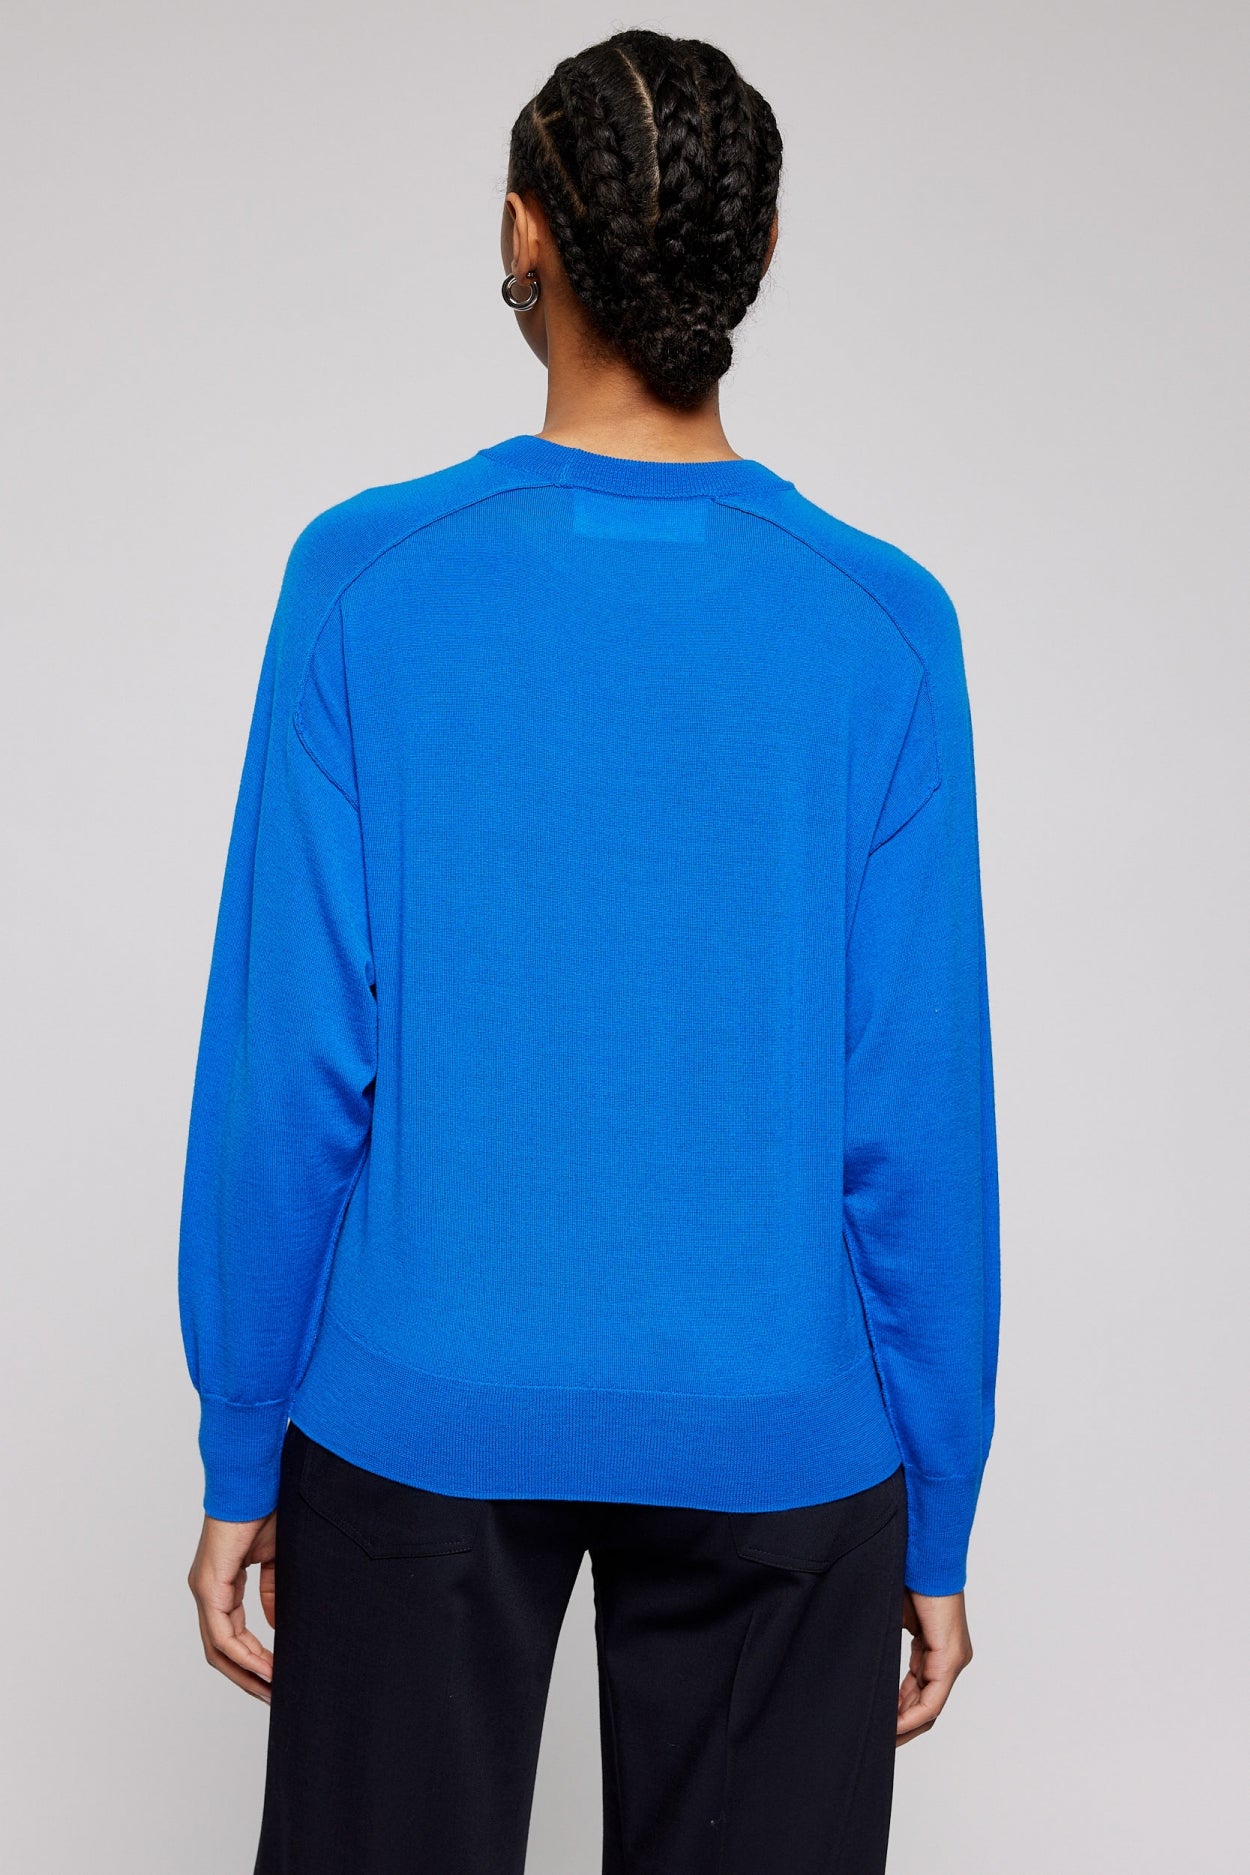 KORY pullover | ROYAL BLUE